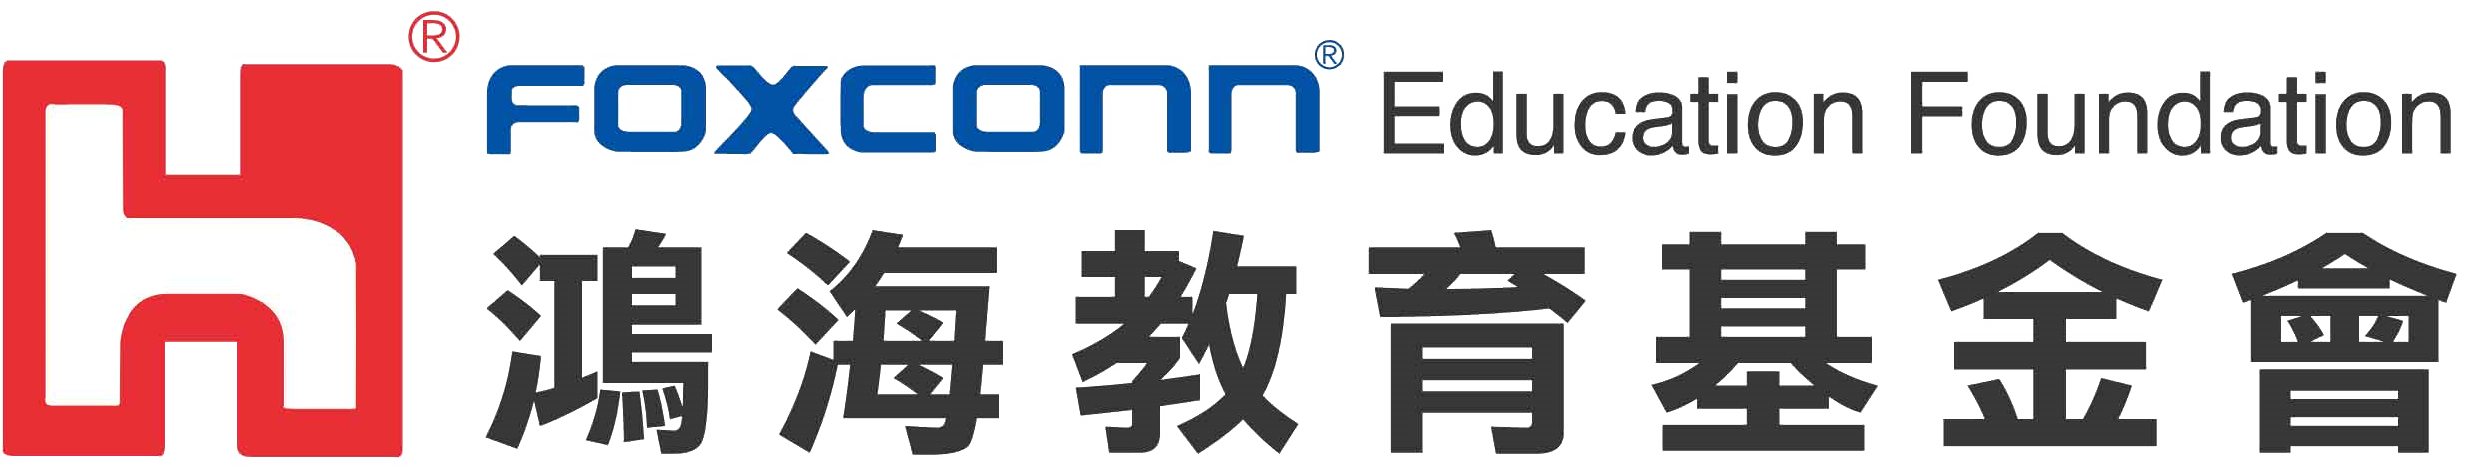 Hh logo